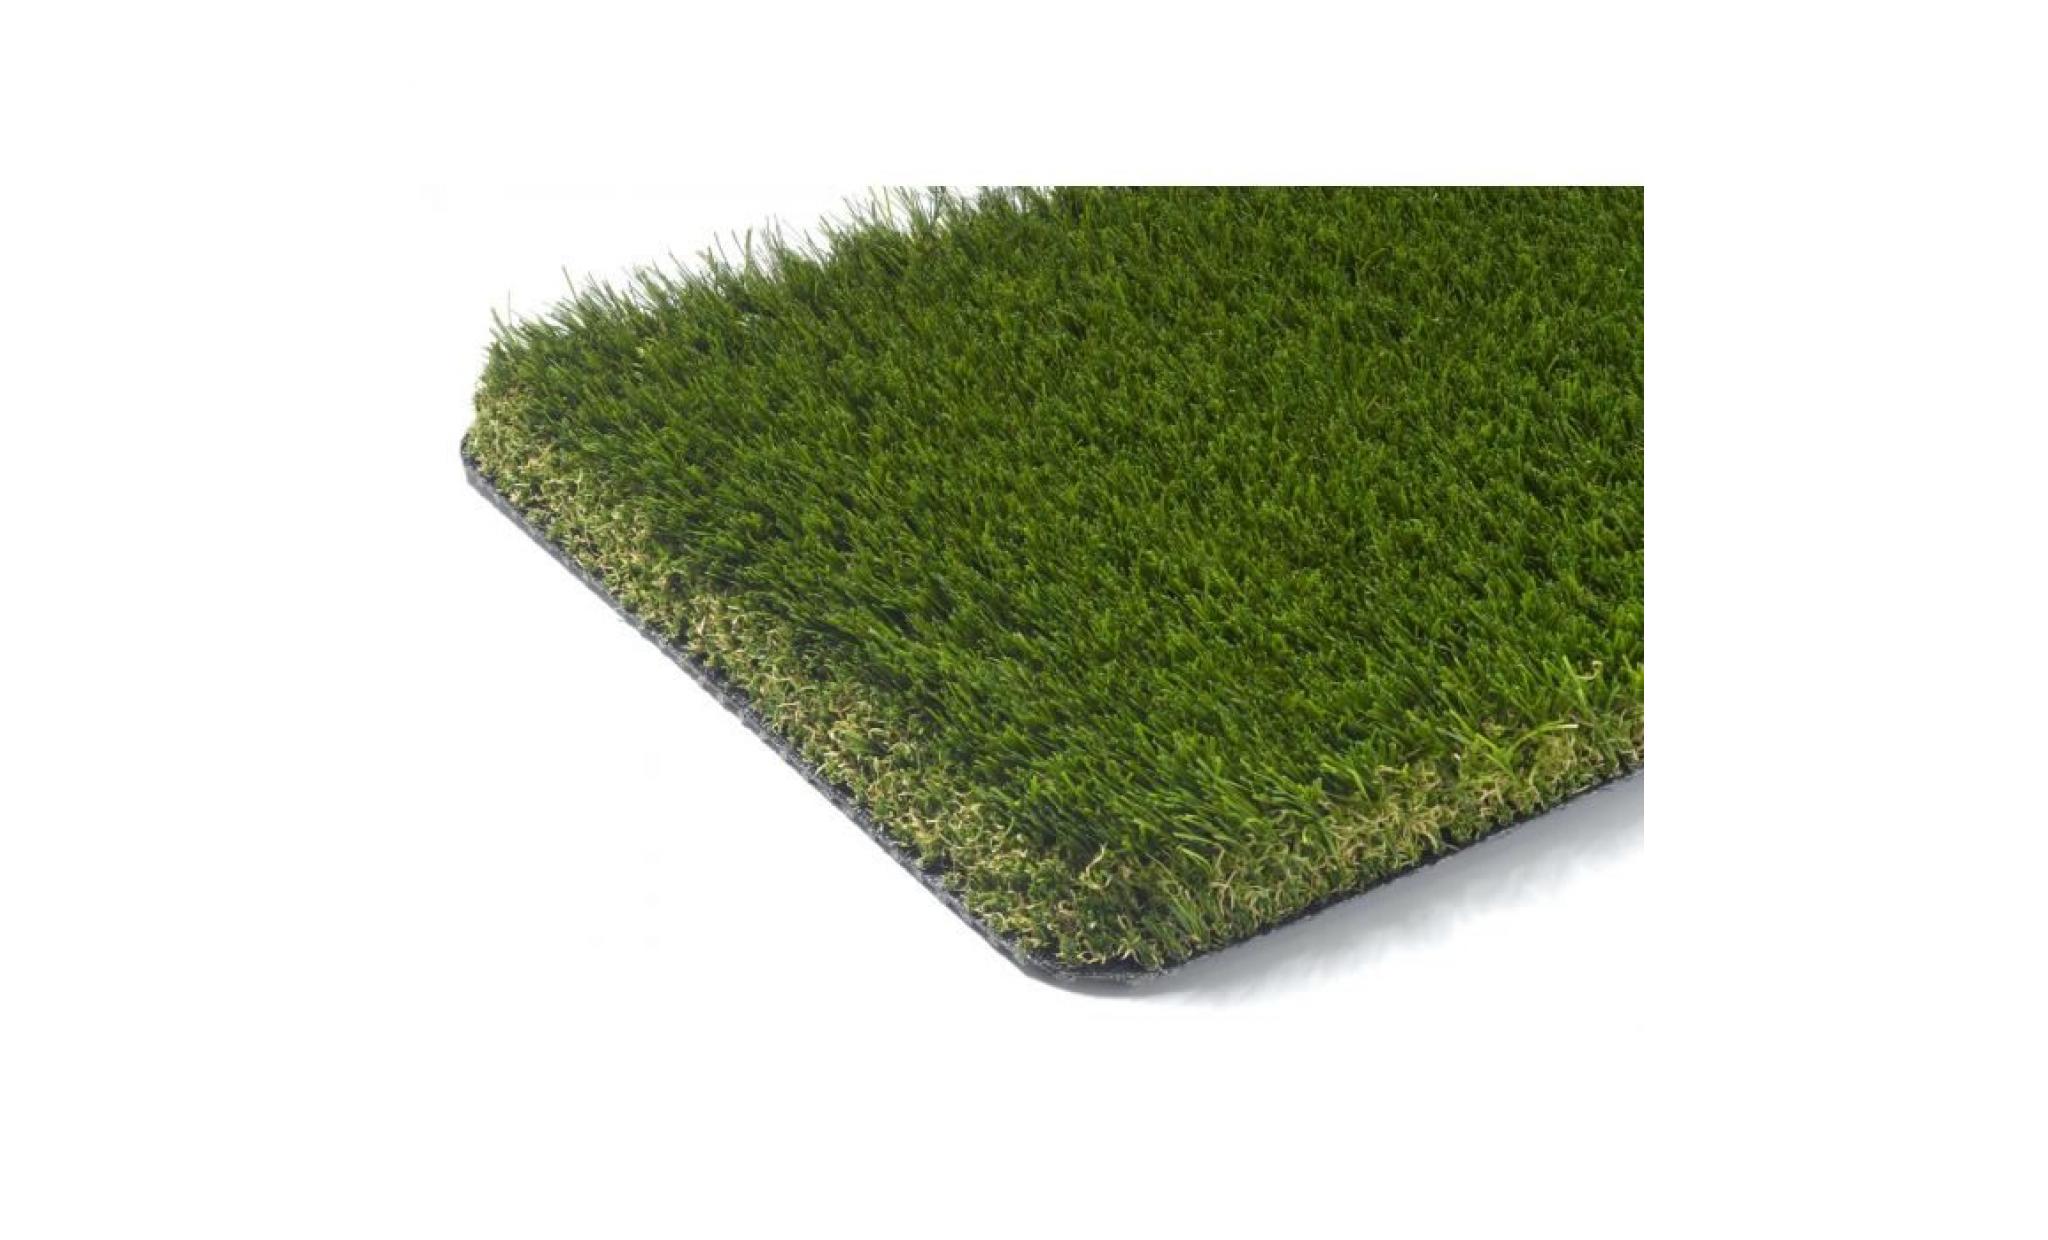 buckingham   tapis type luxe gazon artificiel – pour jardin, terrasse, balcon   vert  [400x150 cm]